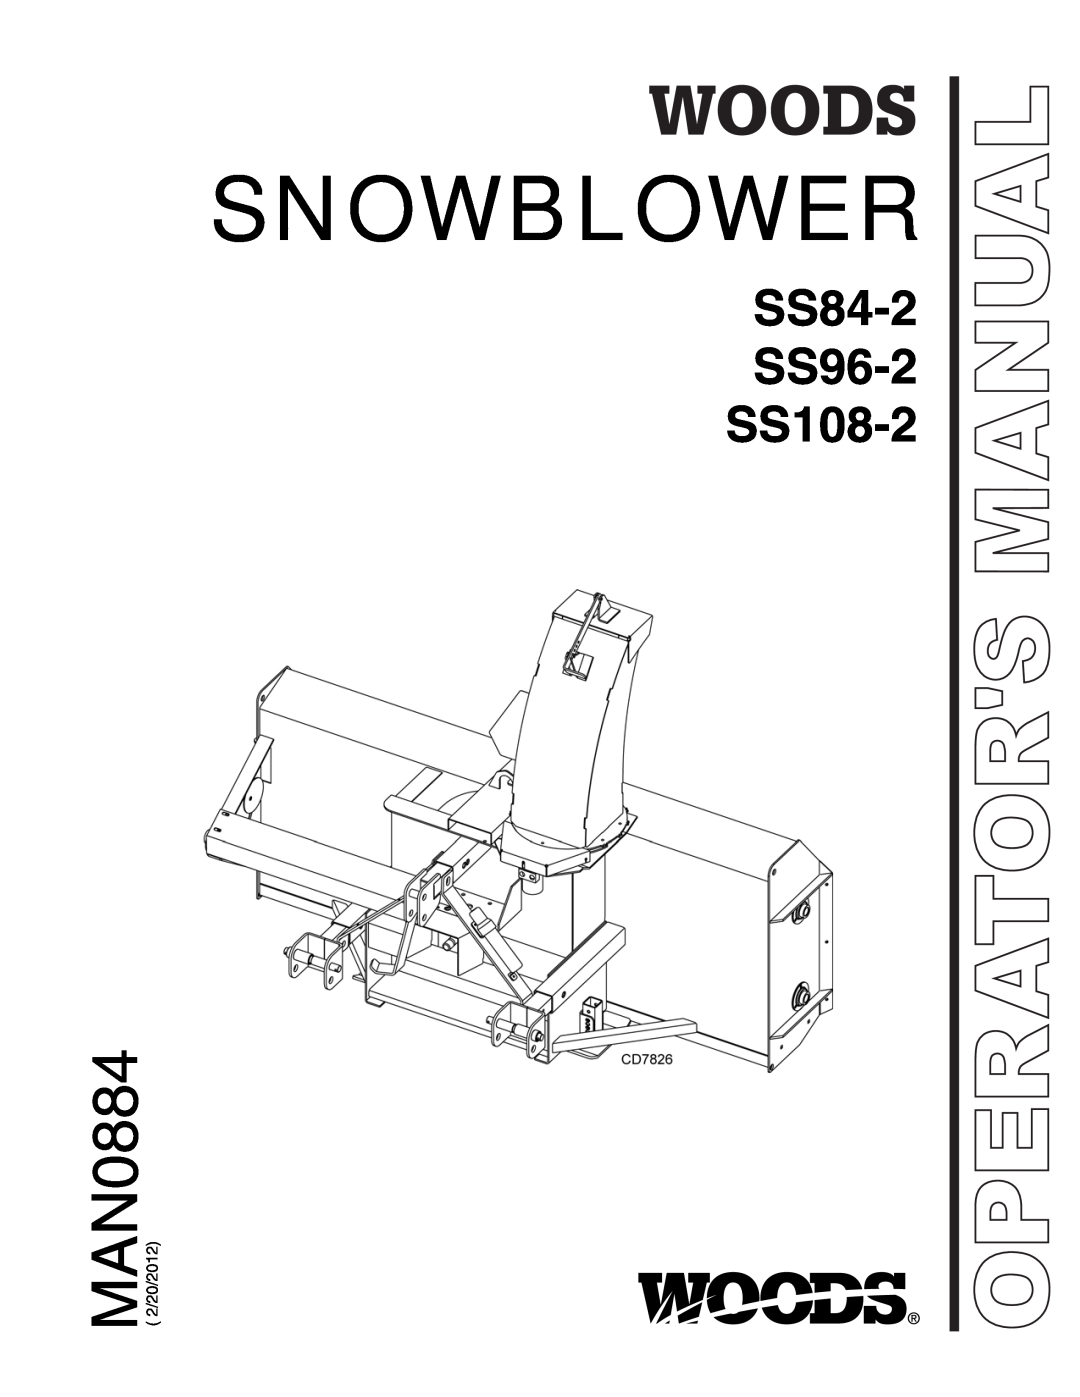 Woods Equipment manual Snowblower, SS84-2 SS96-2 SS108-2, Operators Manual 